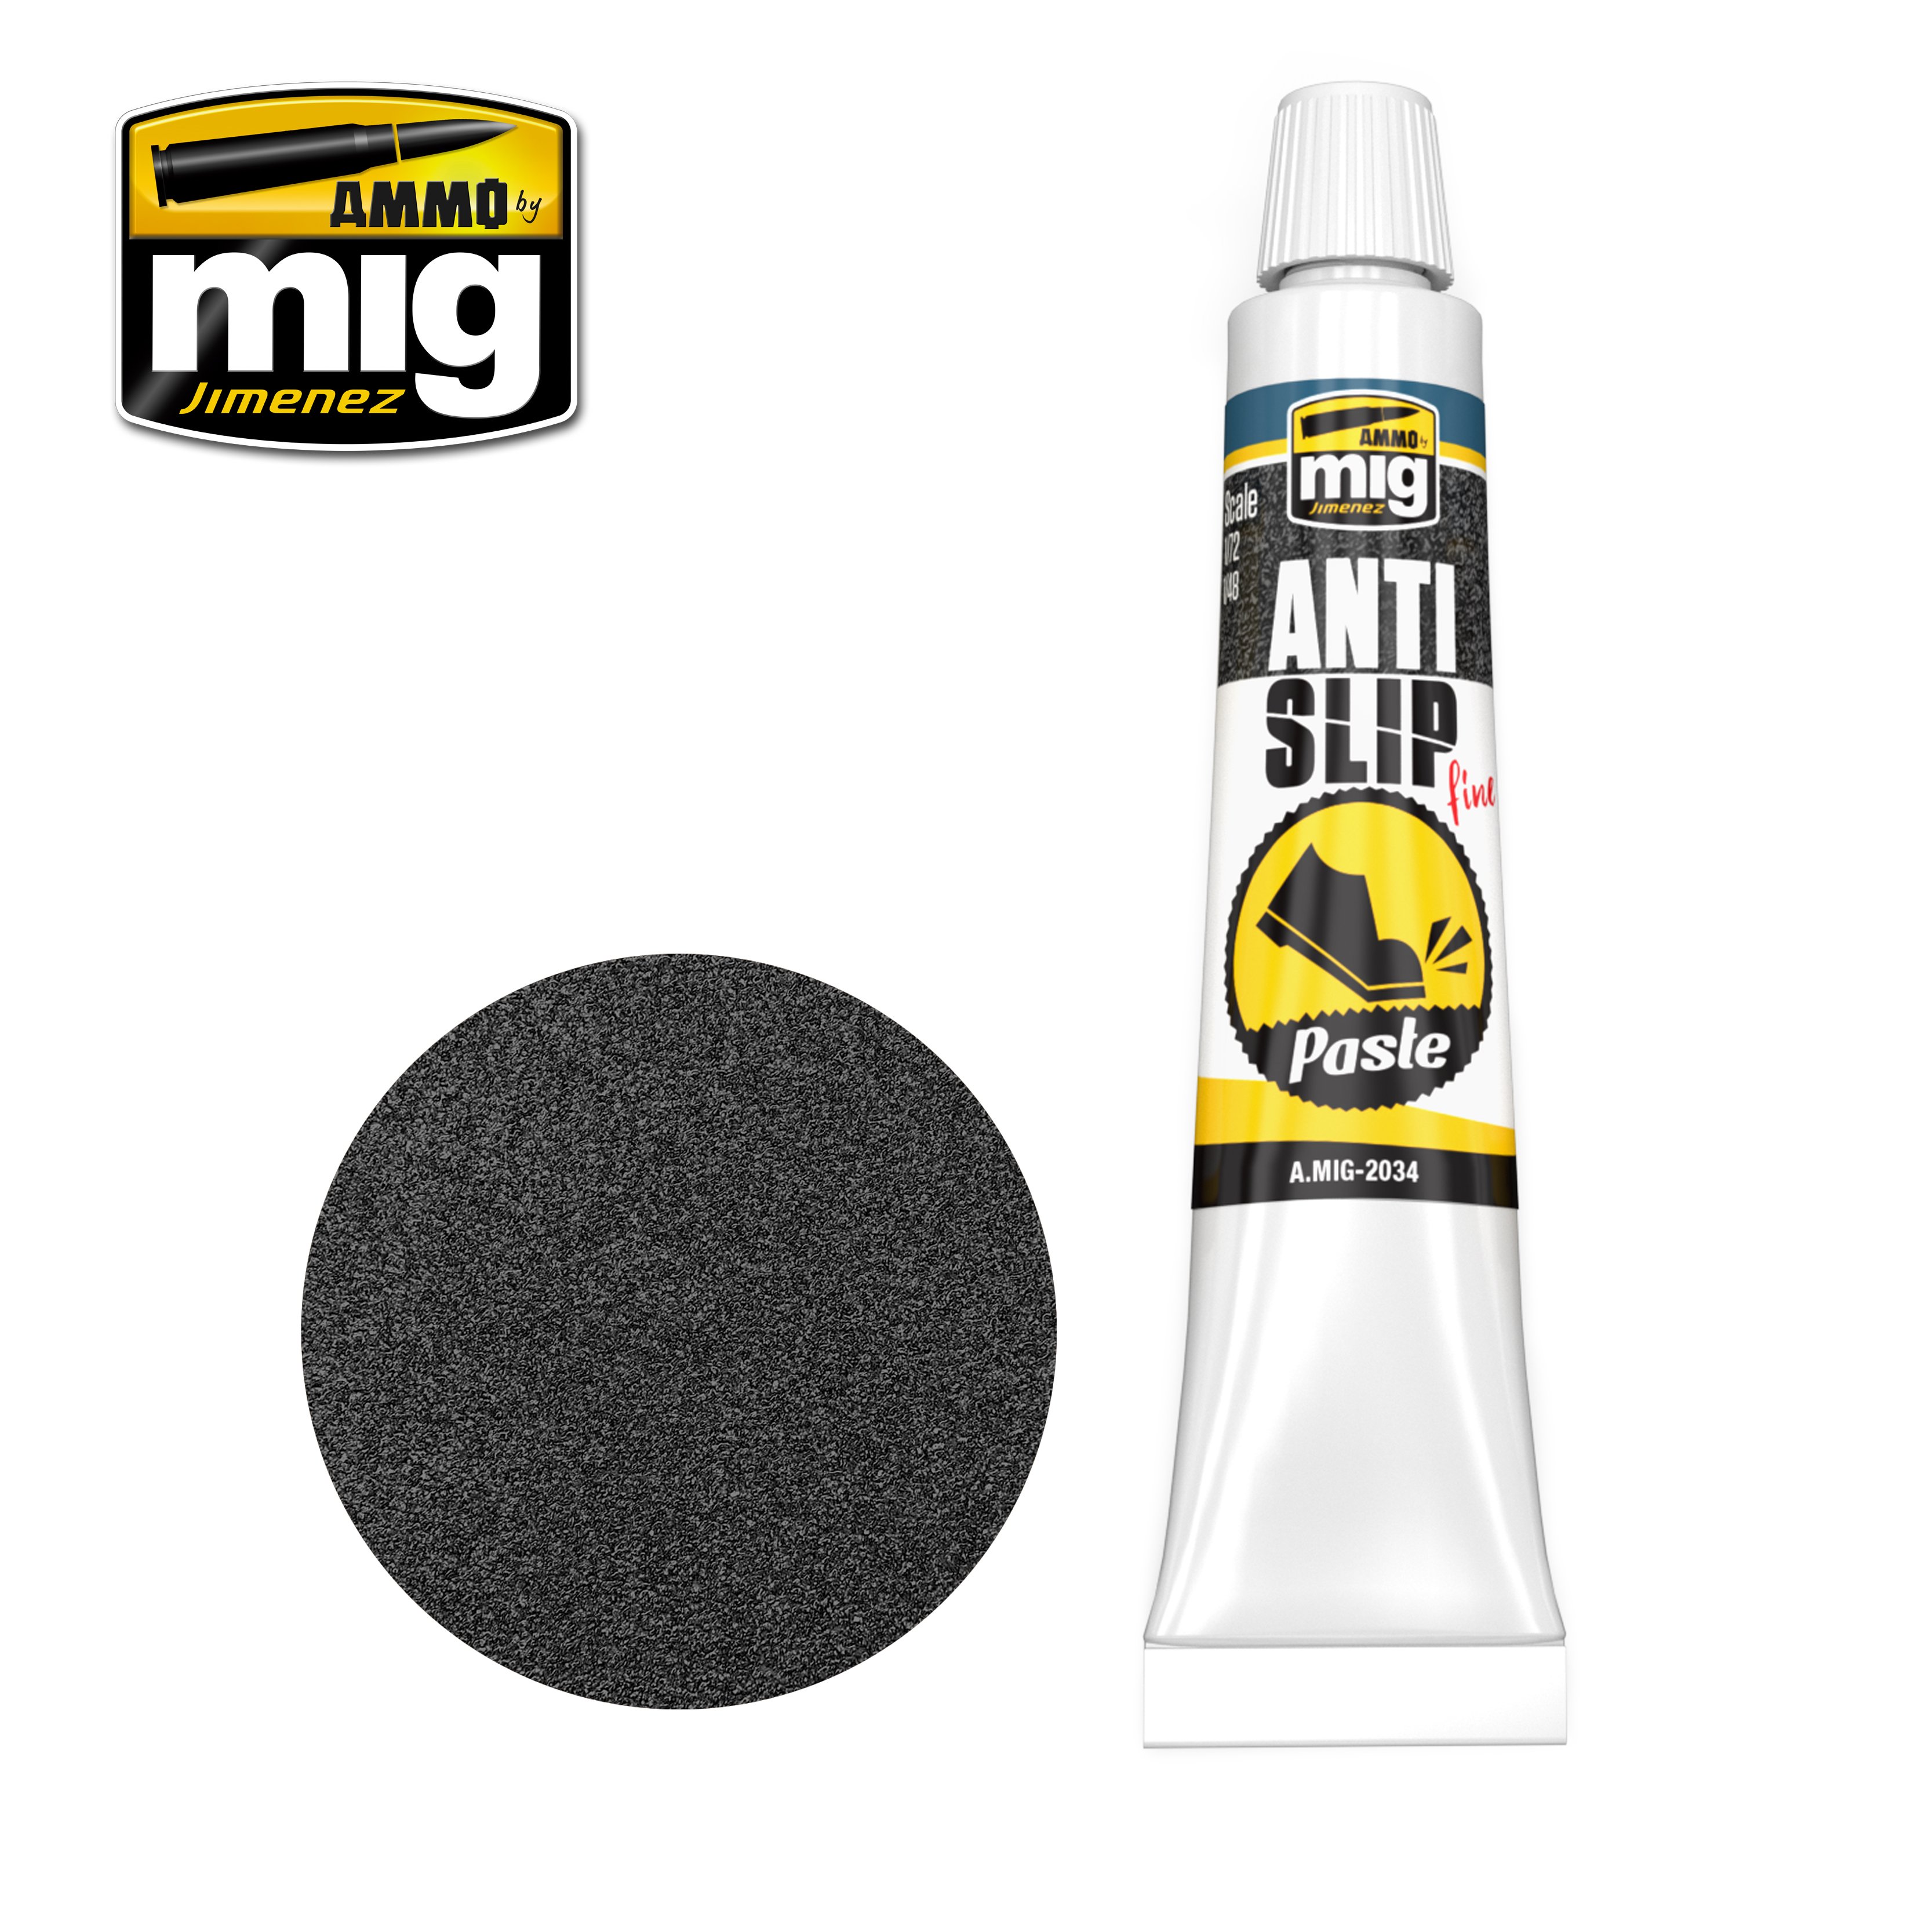 AMMO Mig 2034 Anti-Slip Paste - Black Color (for 1-72 & 1-48)